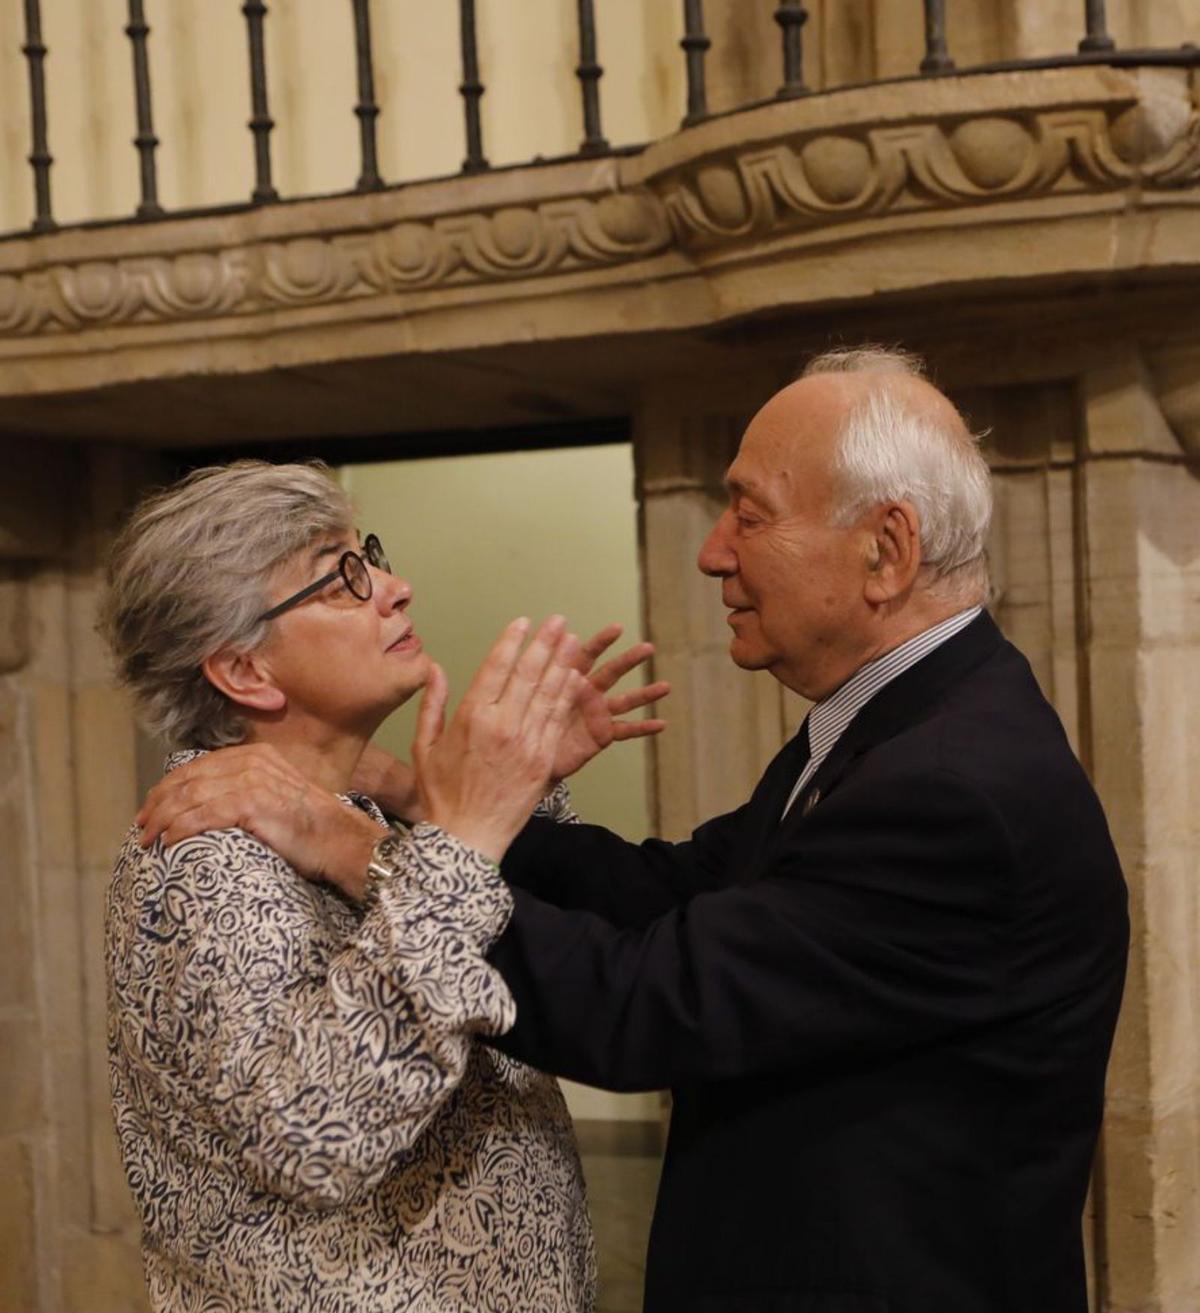 La alcaldesa de Gijón, Ana González, charla con Francisco Rodríguez  al final de la ceremonia de ayer.  | Fernando Rodríguez